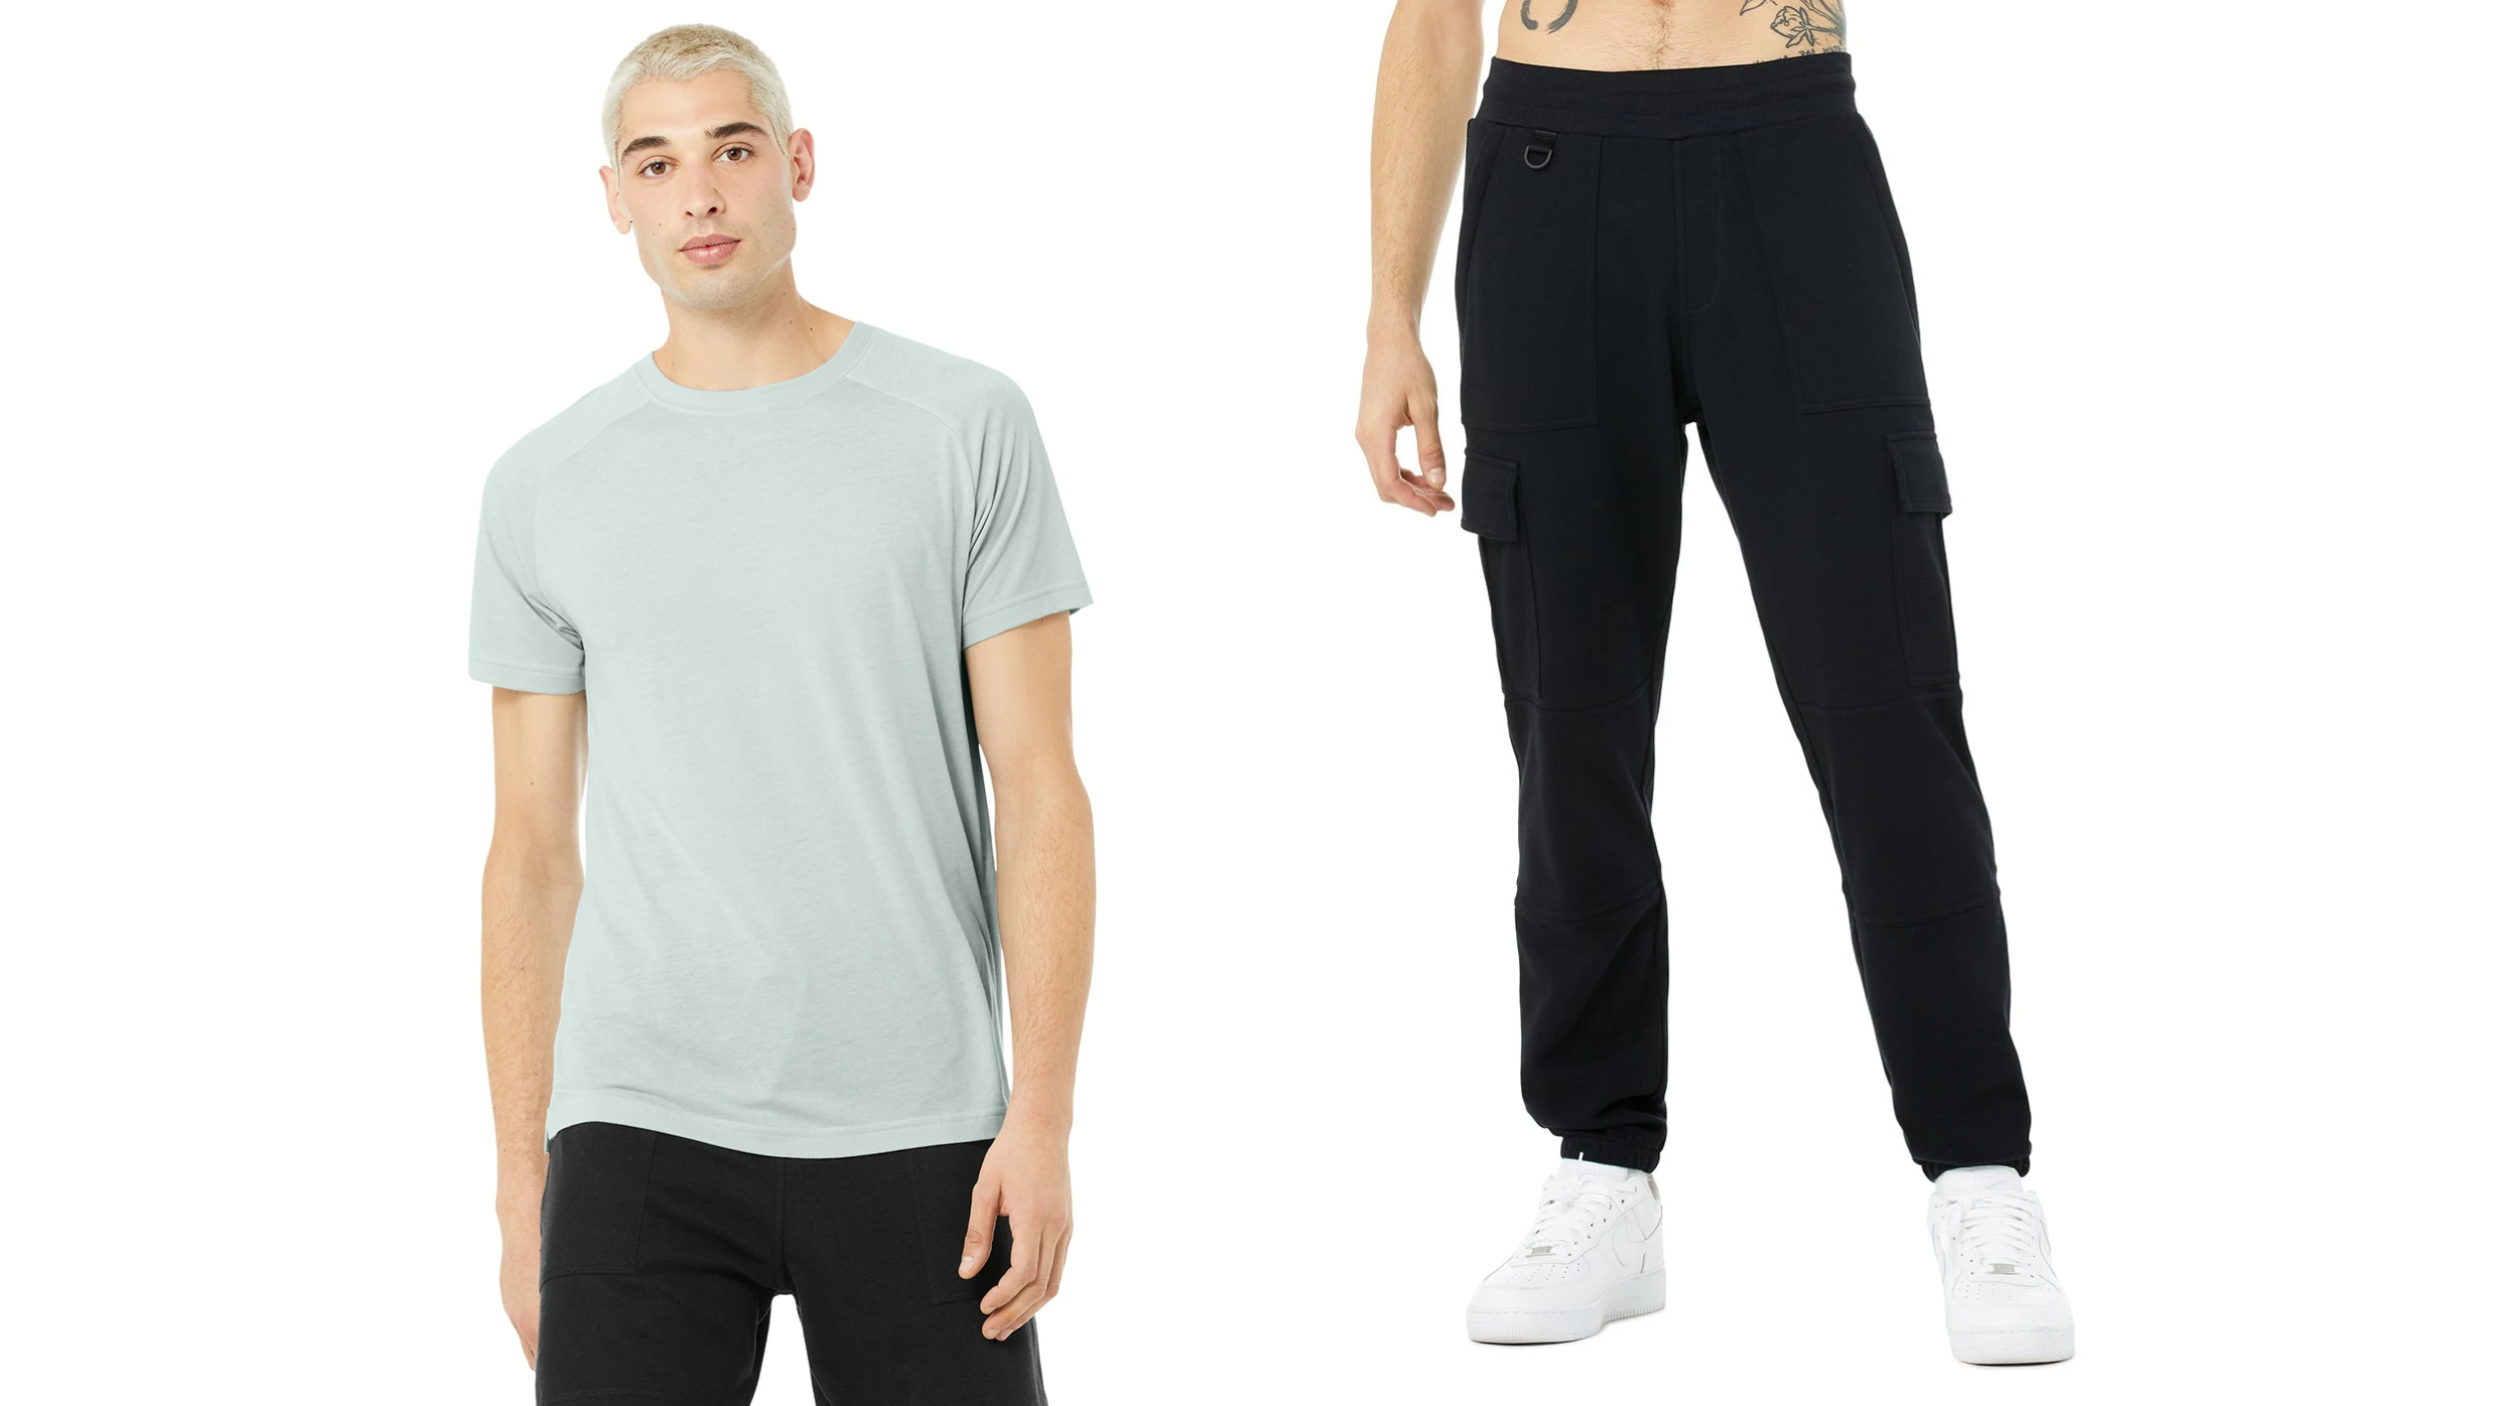 Cuffed Yoga Pants (Solid Heather Grey) | Mens yoga clothes, Fashion, Clothes